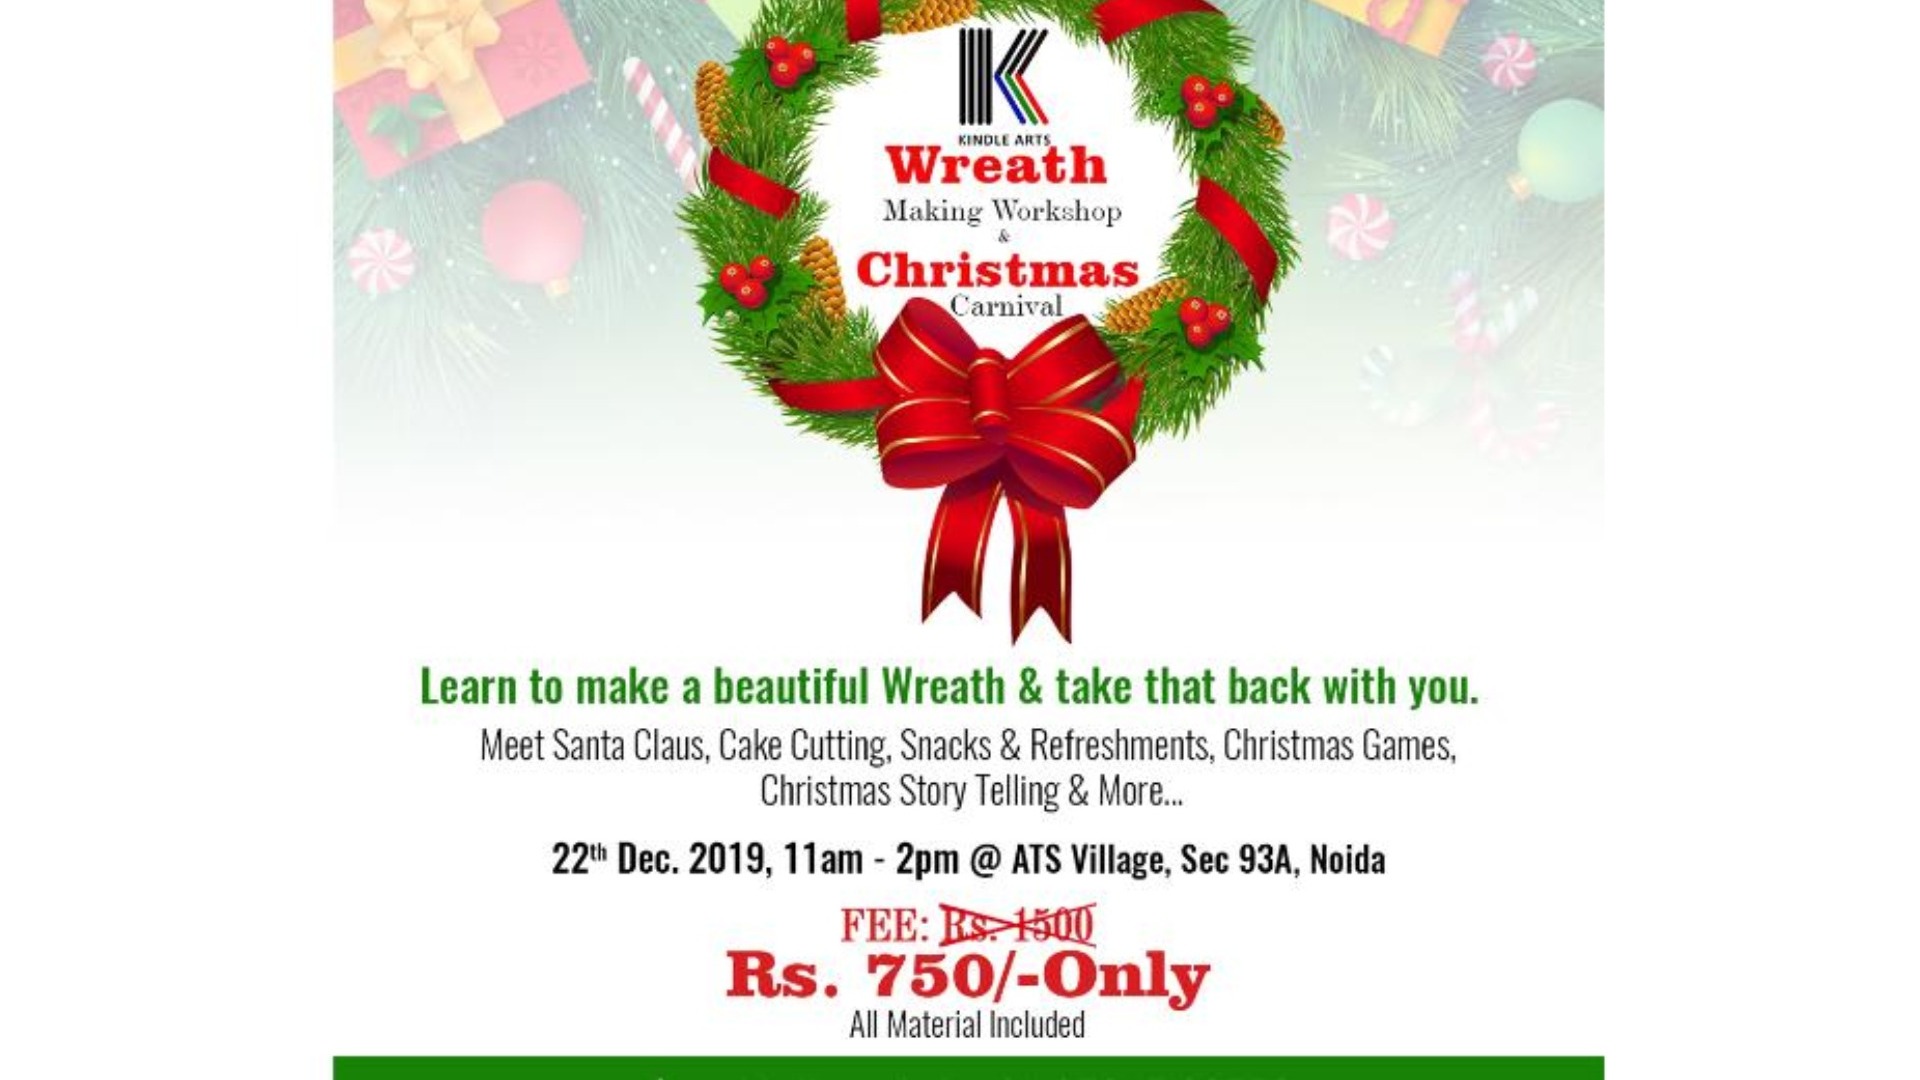 Wreath Making Workshop & Christmas Carnival, New Delhi, Delhi, India